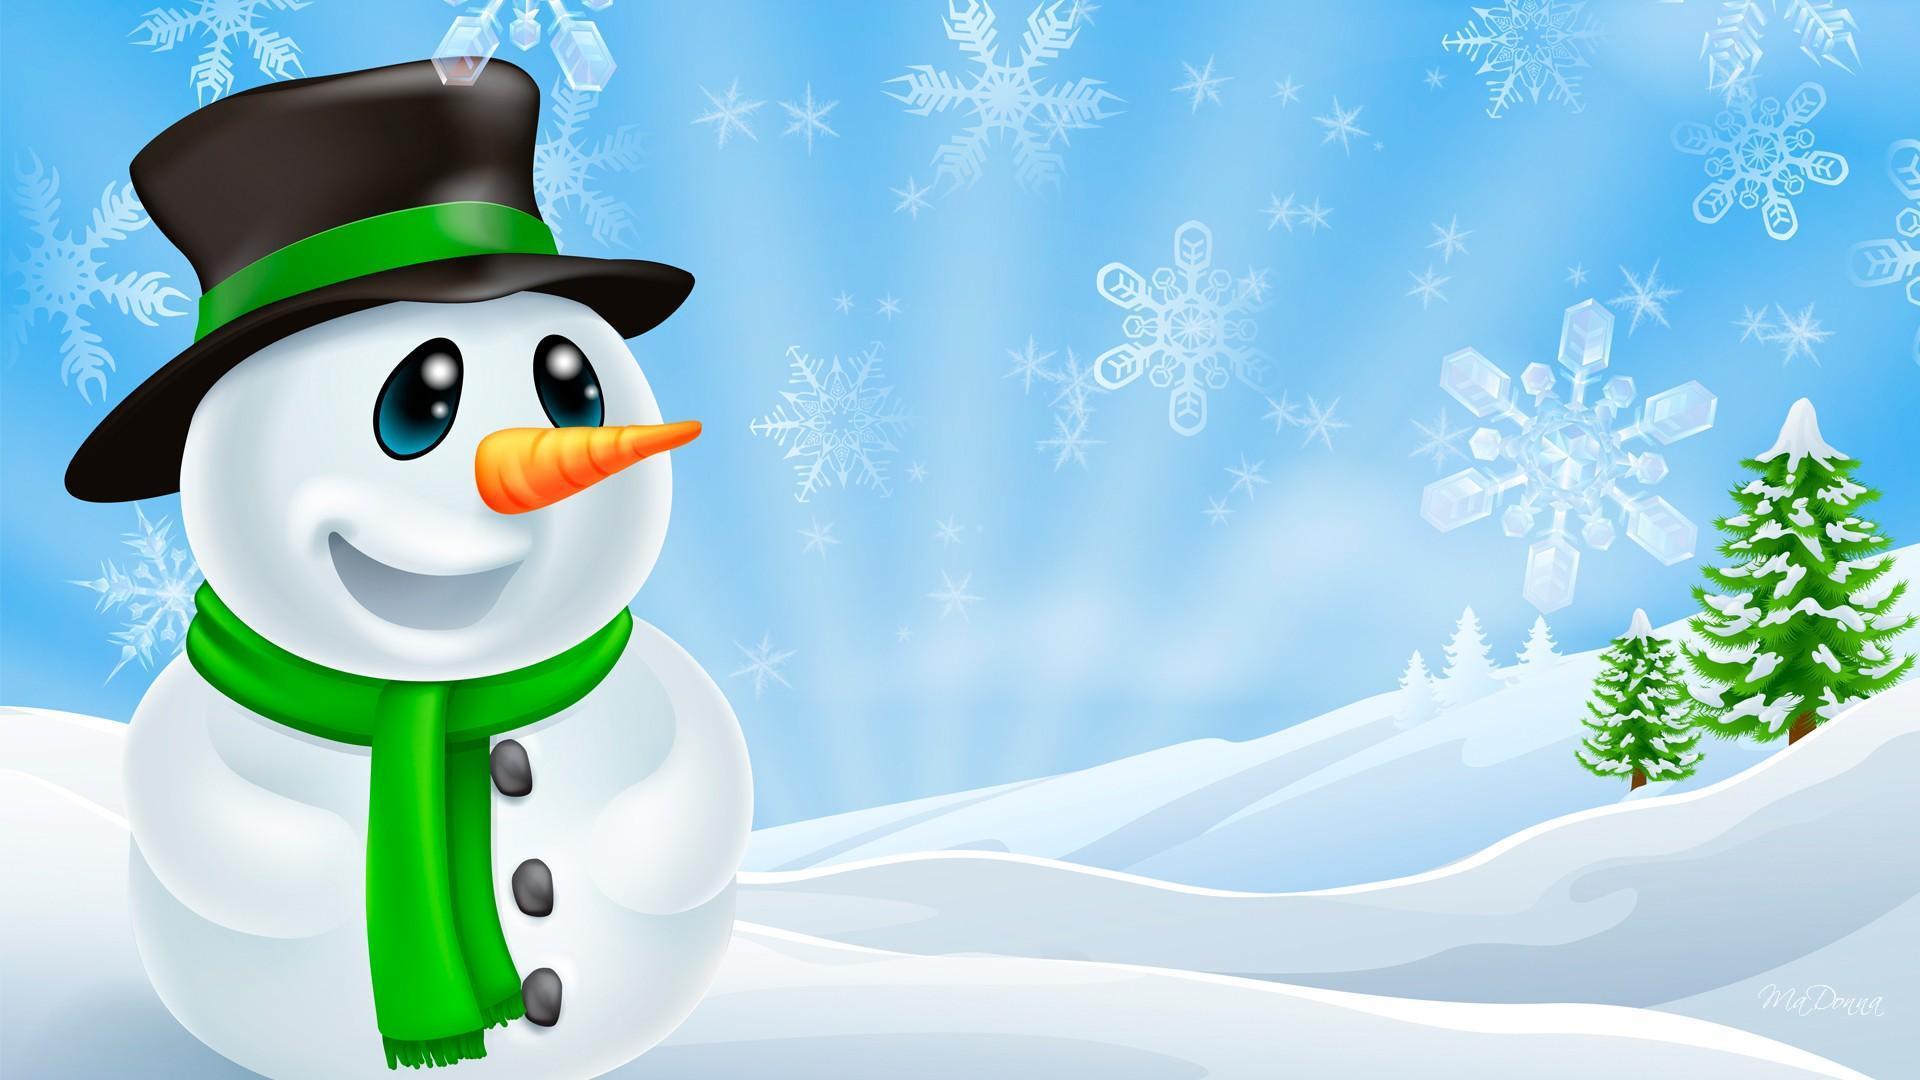 Happiest Snowman Wallpaper 48335 High Resolution. download all